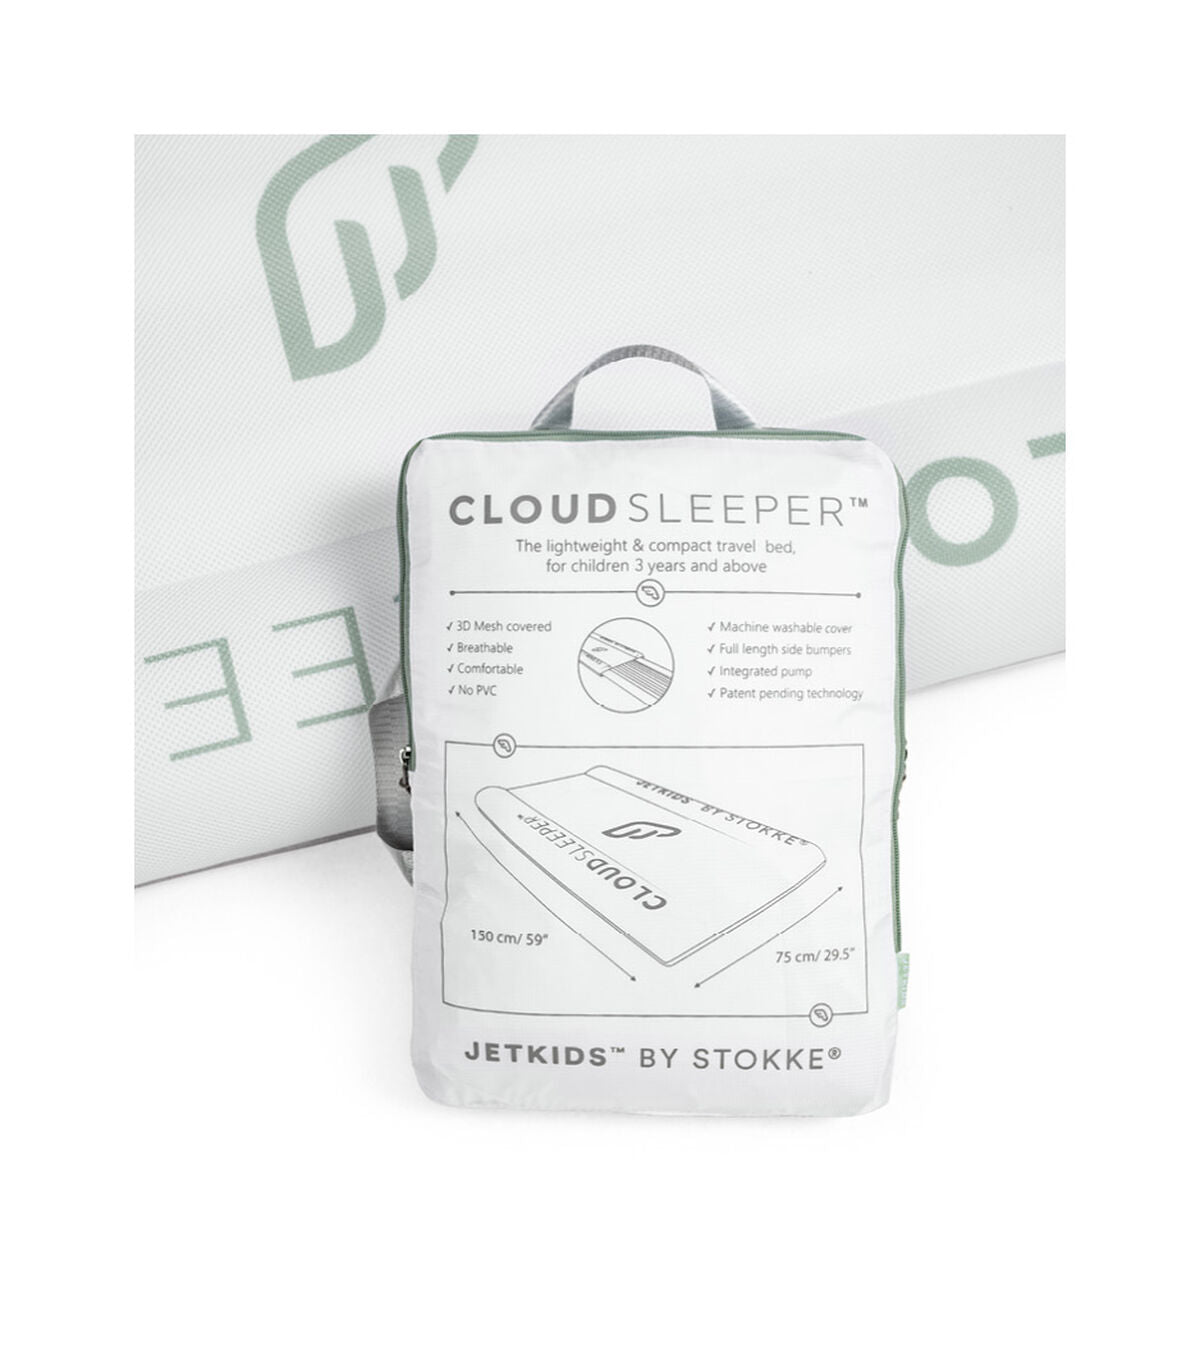 Stokke JetKids by Stokke CloudSleeper, White - ANB Baby -$75 - $100